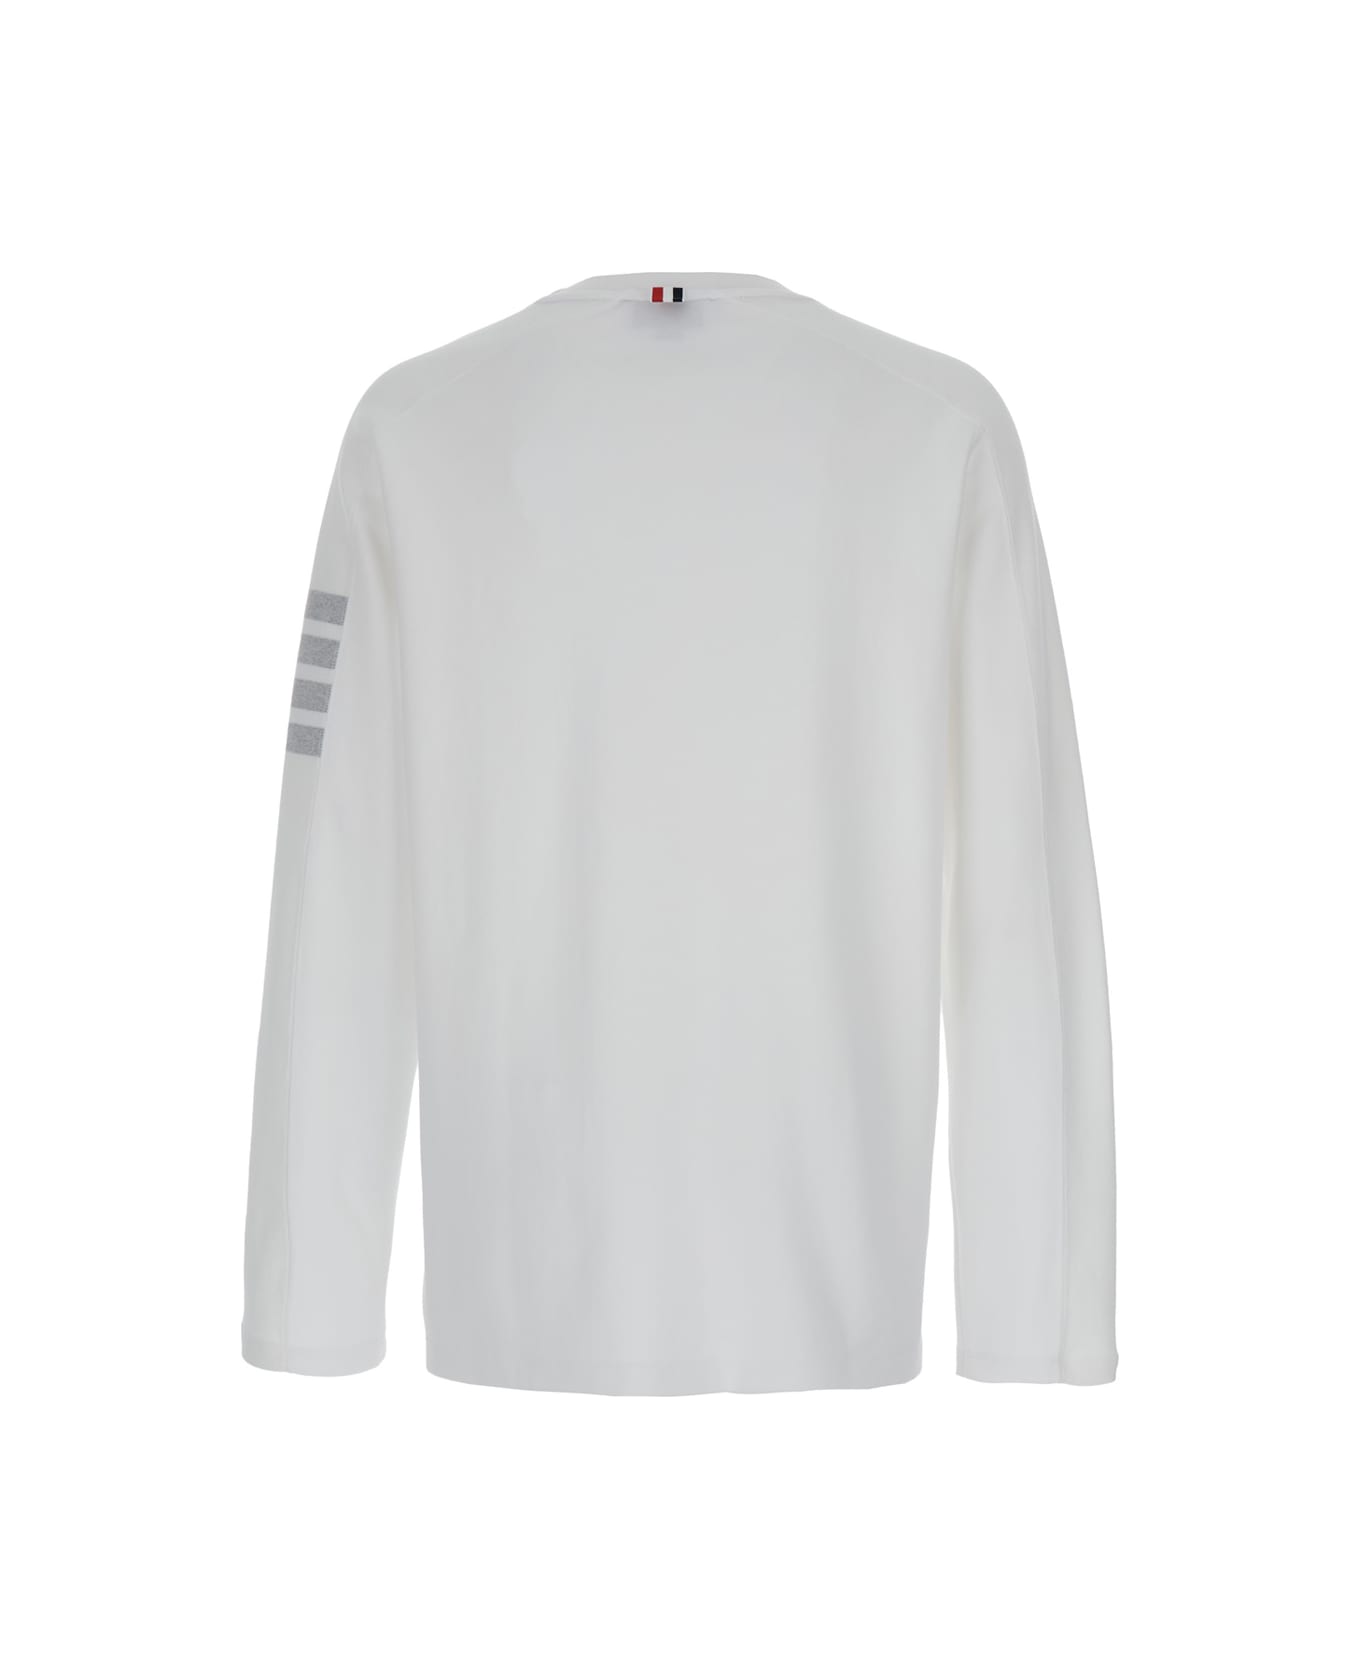 Thom Browne Long Sleeve Tee W/ 4 Bar Stripe In Milano Cotton - White